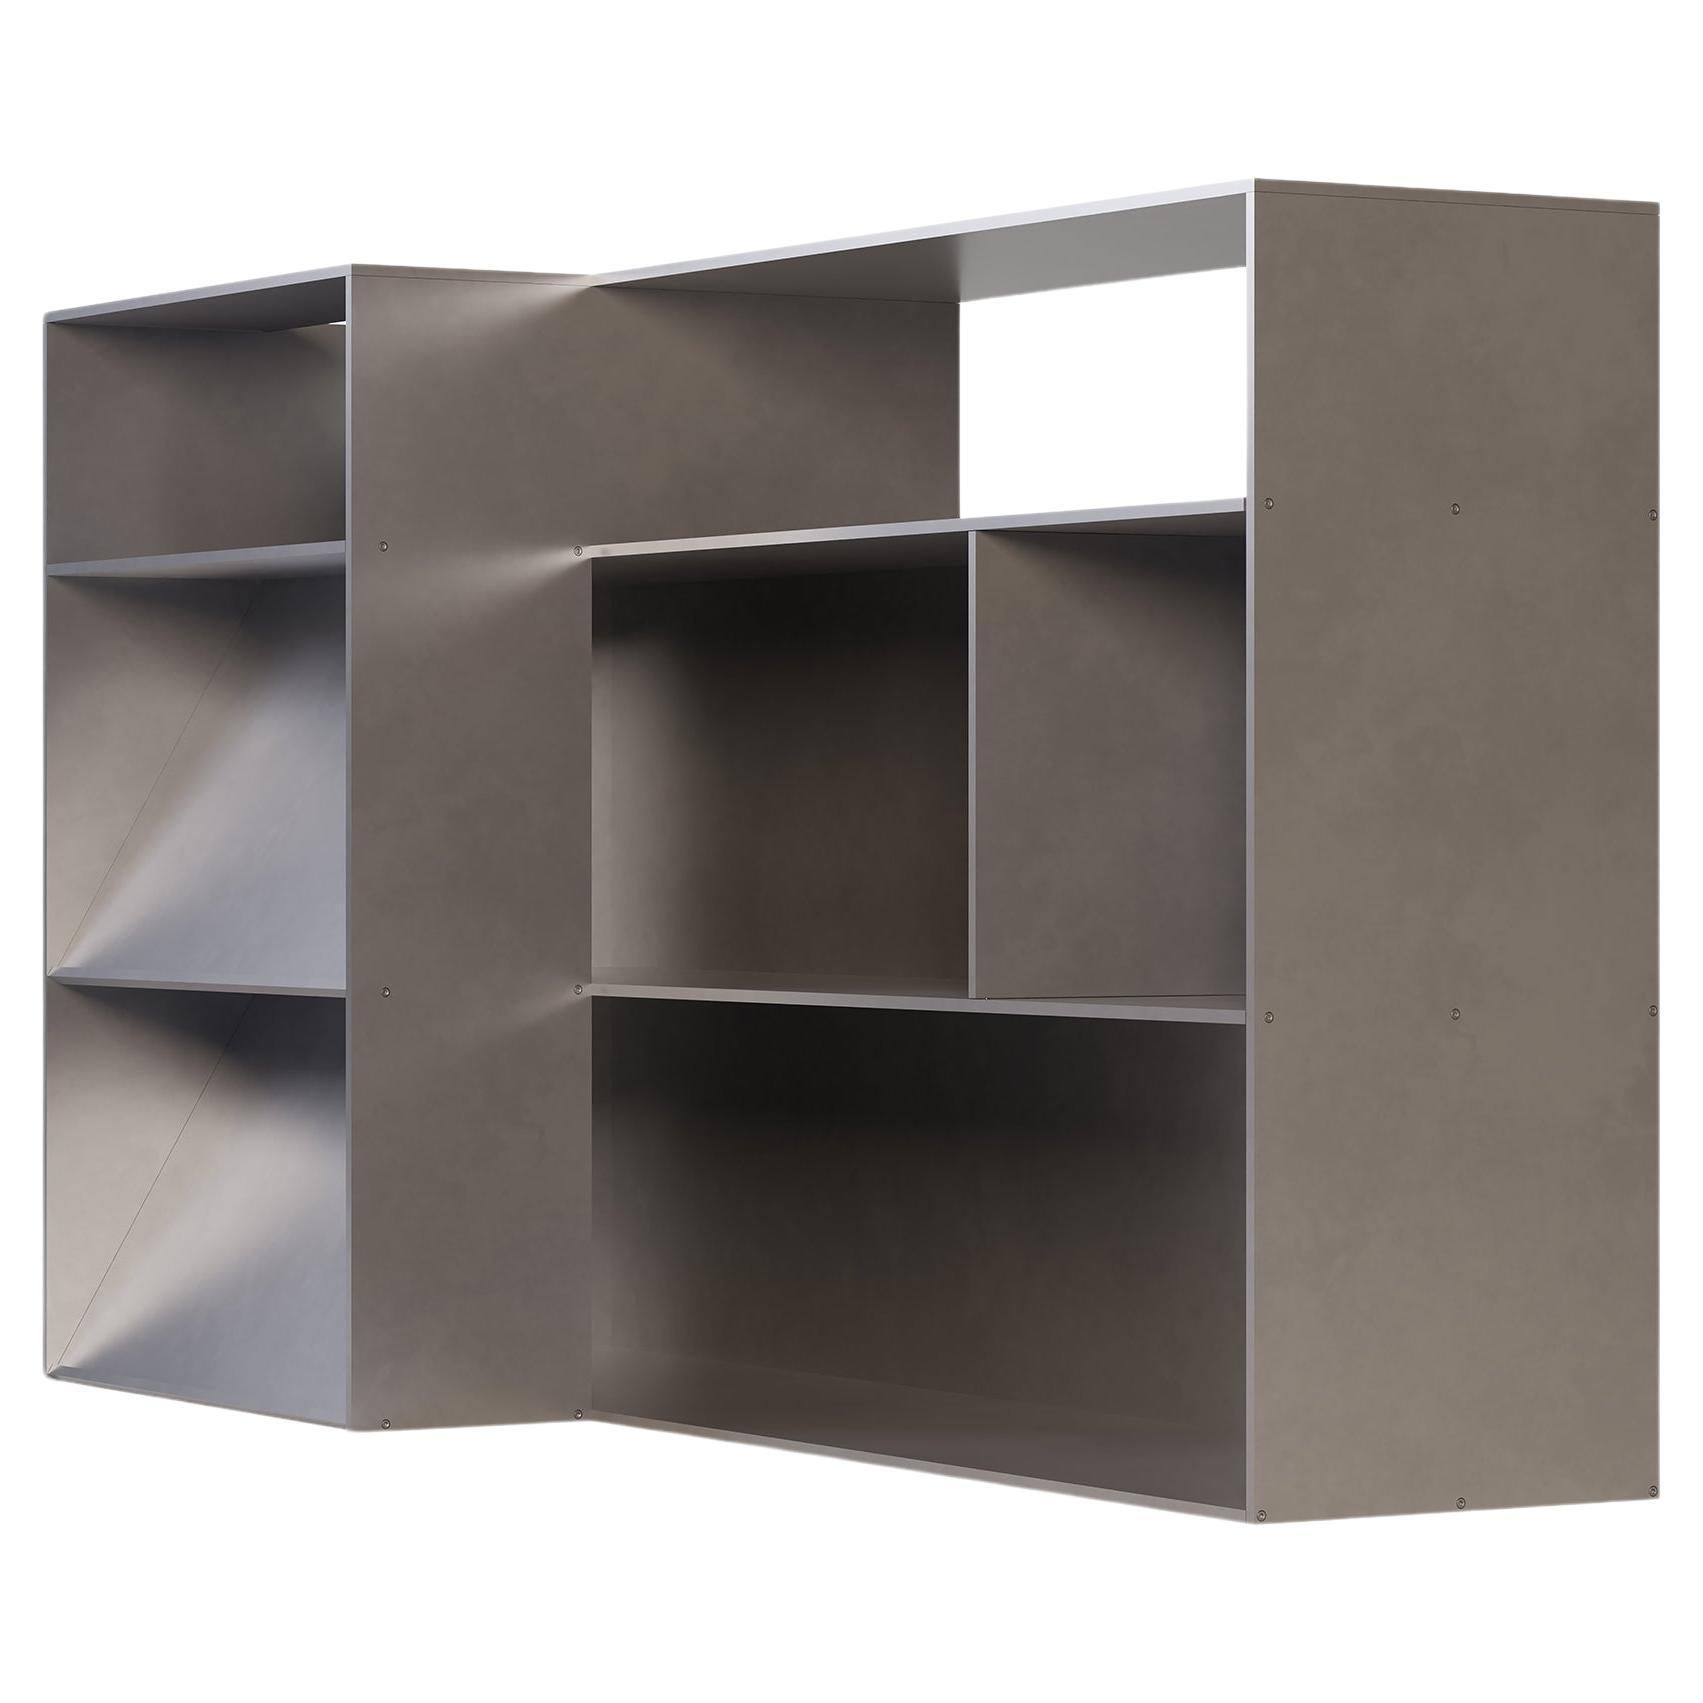 NW Corner Shelf in Waxed Aluminum Plate by Jonathan Nesci For Sale